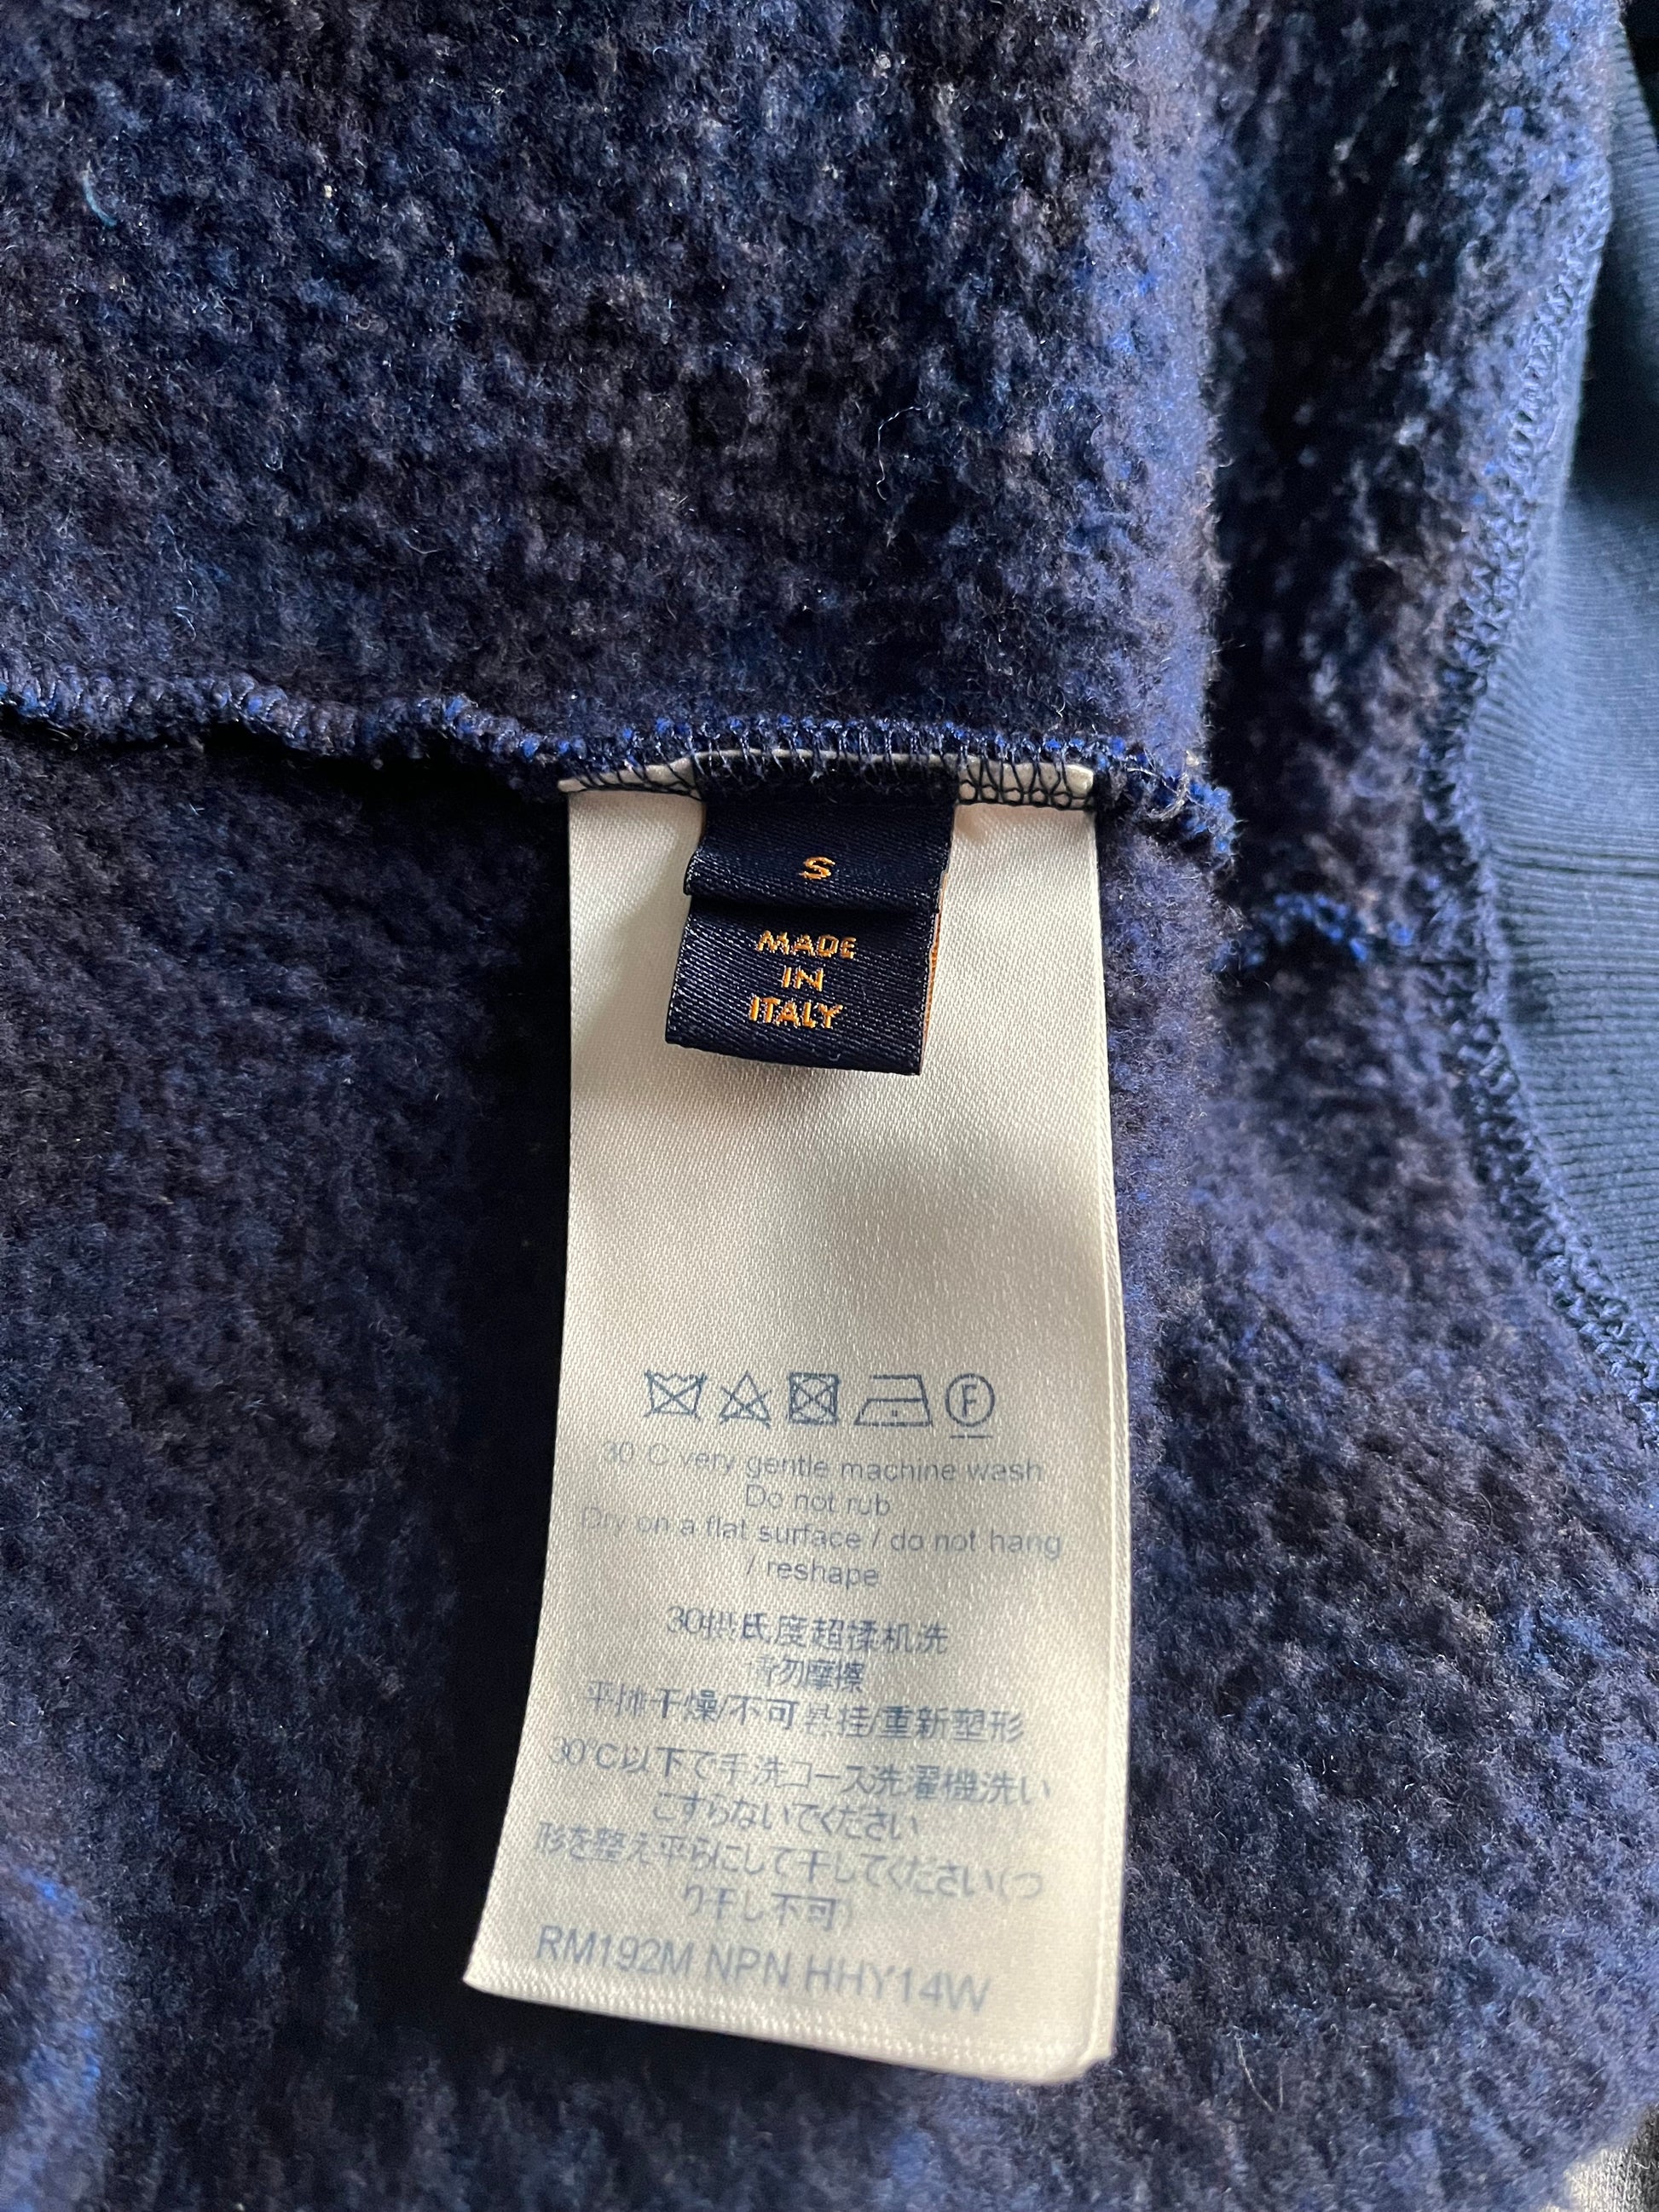 Louis Vuitton Monogram Jacquard Sweater Blue AUTHENTIC FROM JAPAN